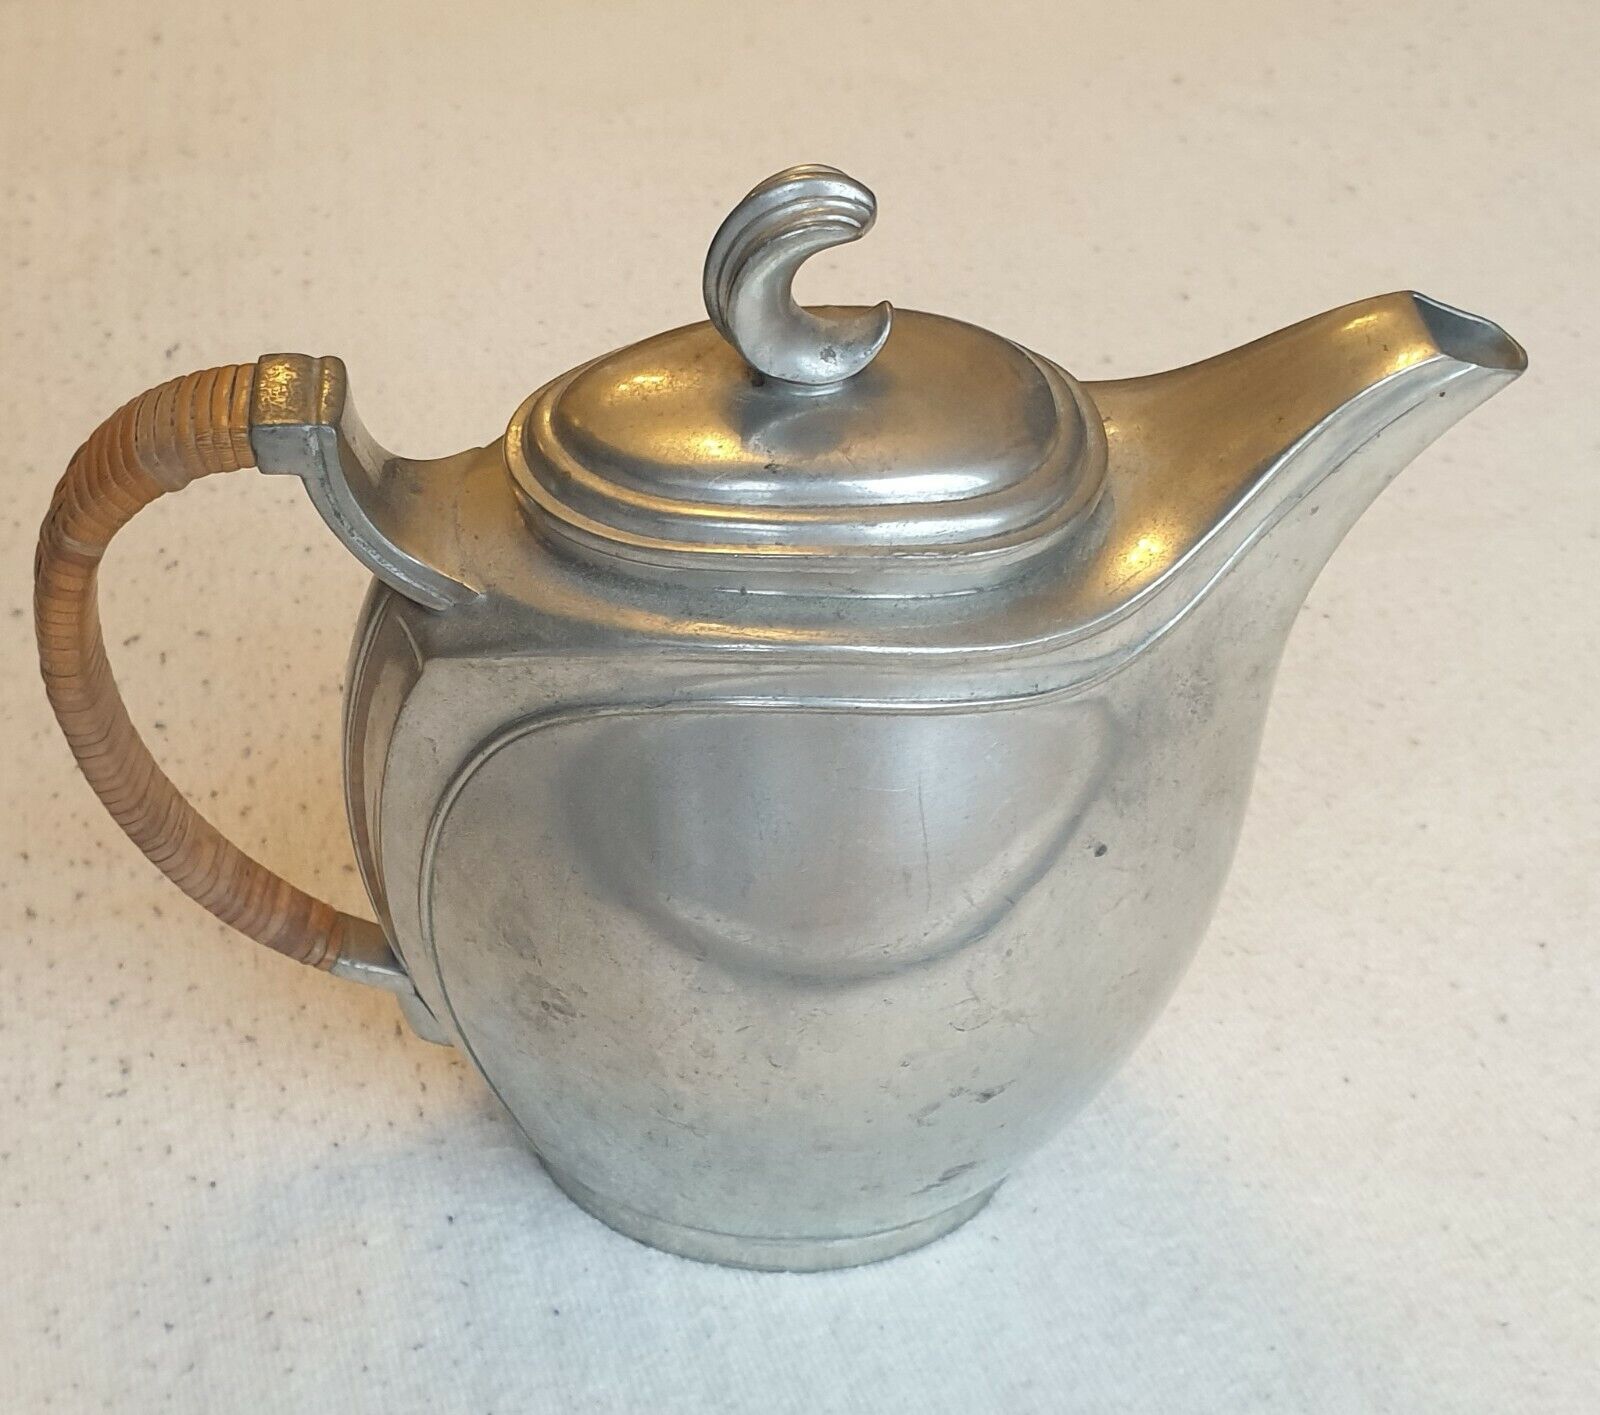 Just New arrival Andersen Danish 1884–1943 original pot deco tea silver Animer and price revision art